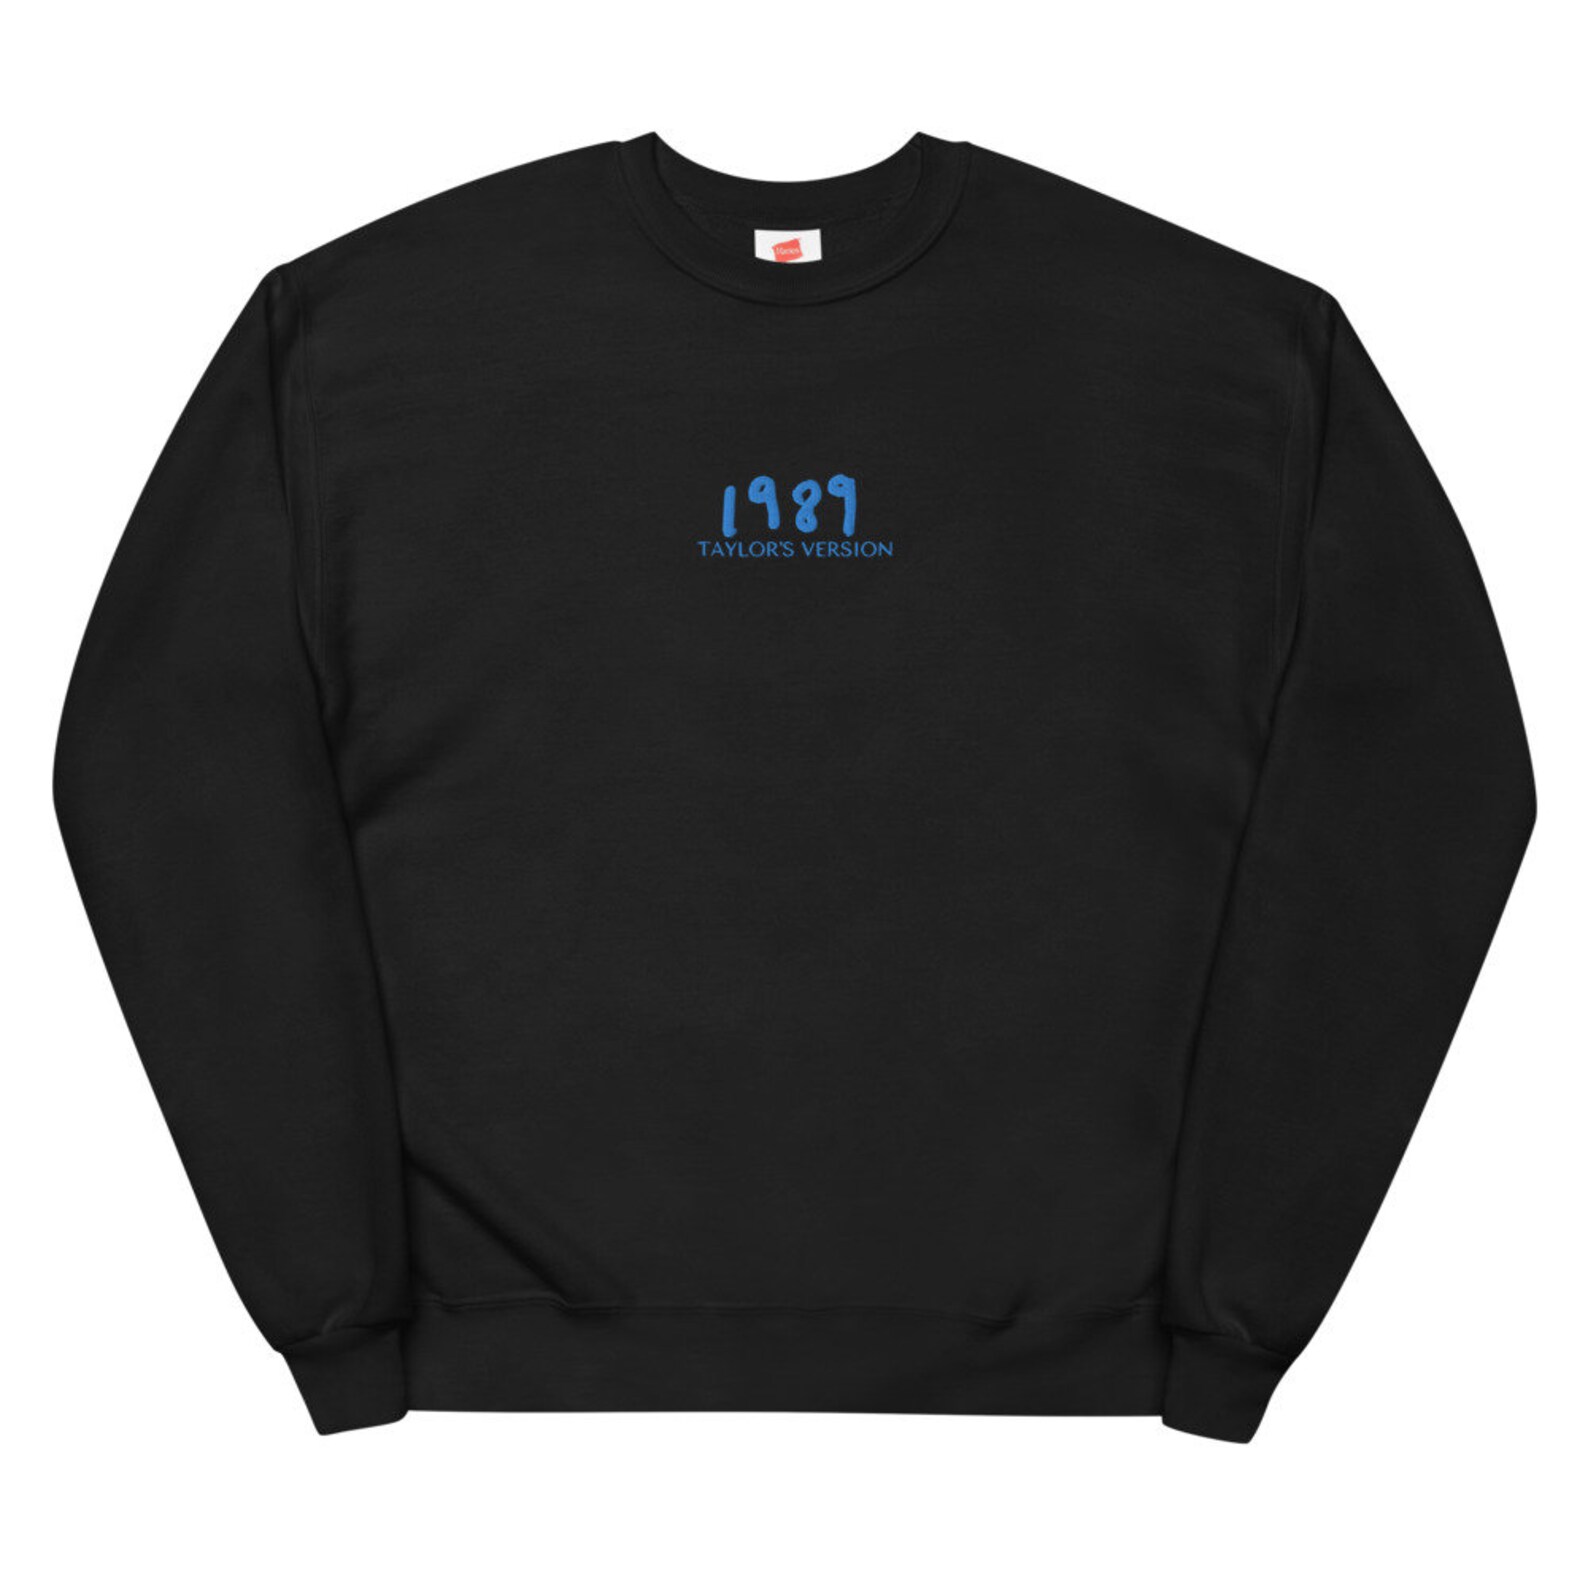 1989 Taylor's Version Embroidered Unisex Sweatshirt | Etsy